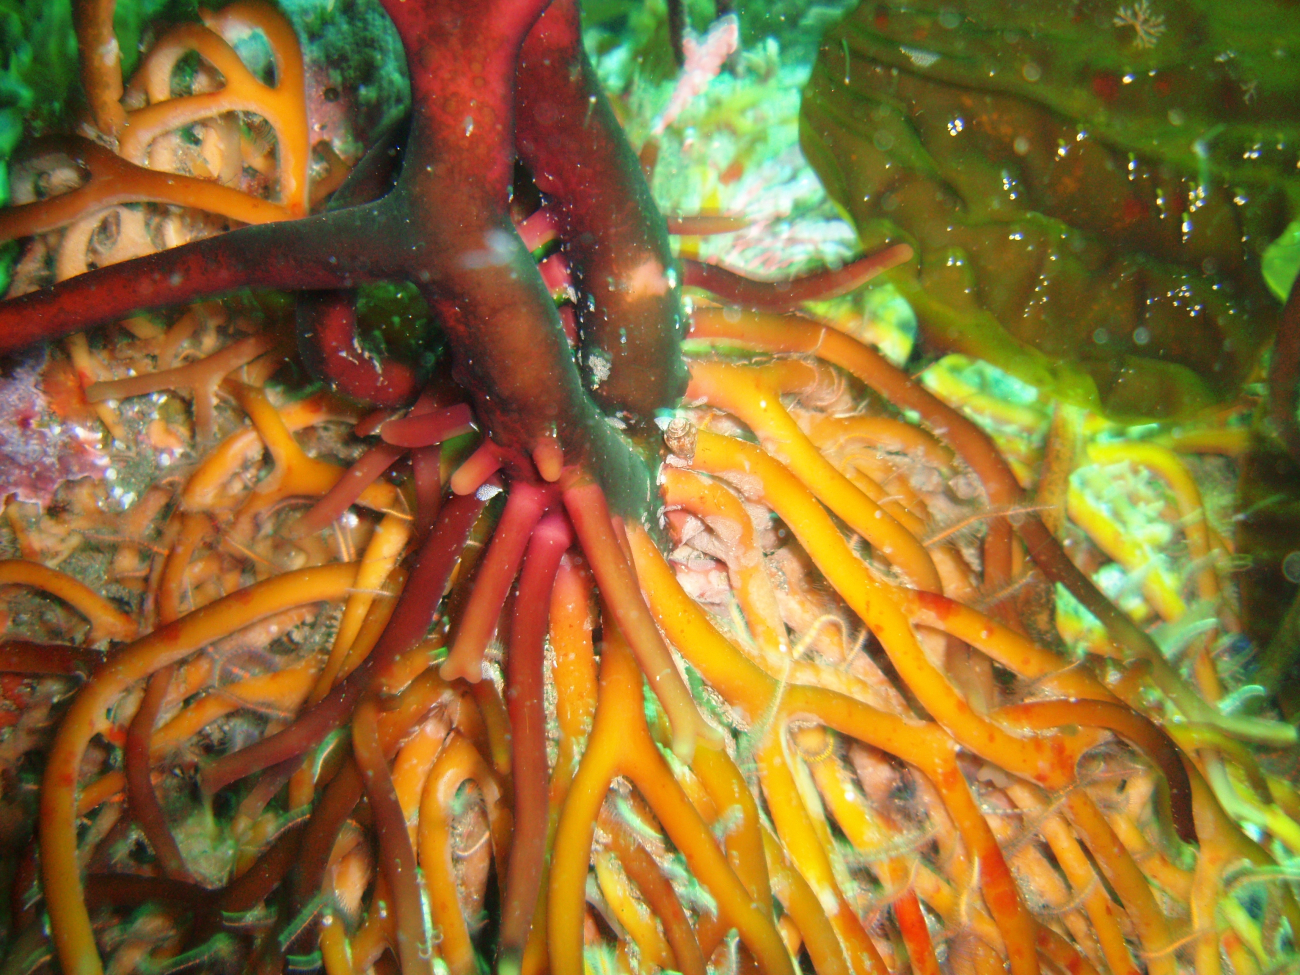 A kelp holdfast